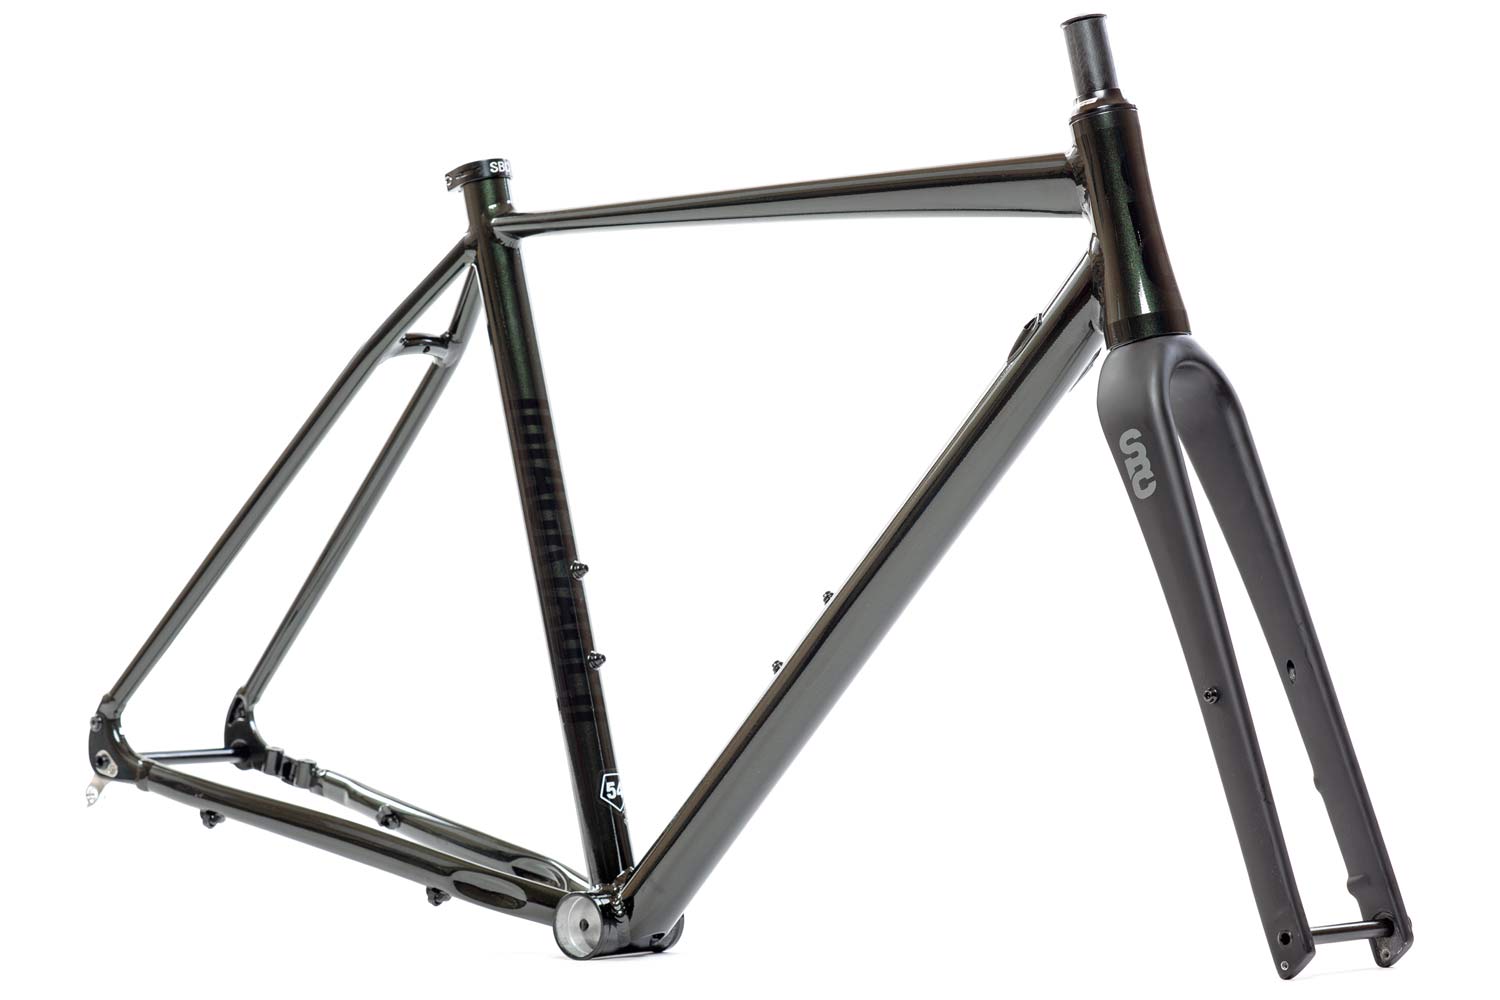 2021 State 6061 Black Label All-Road affordable alloy gravel bike updates, new dark frameset colors